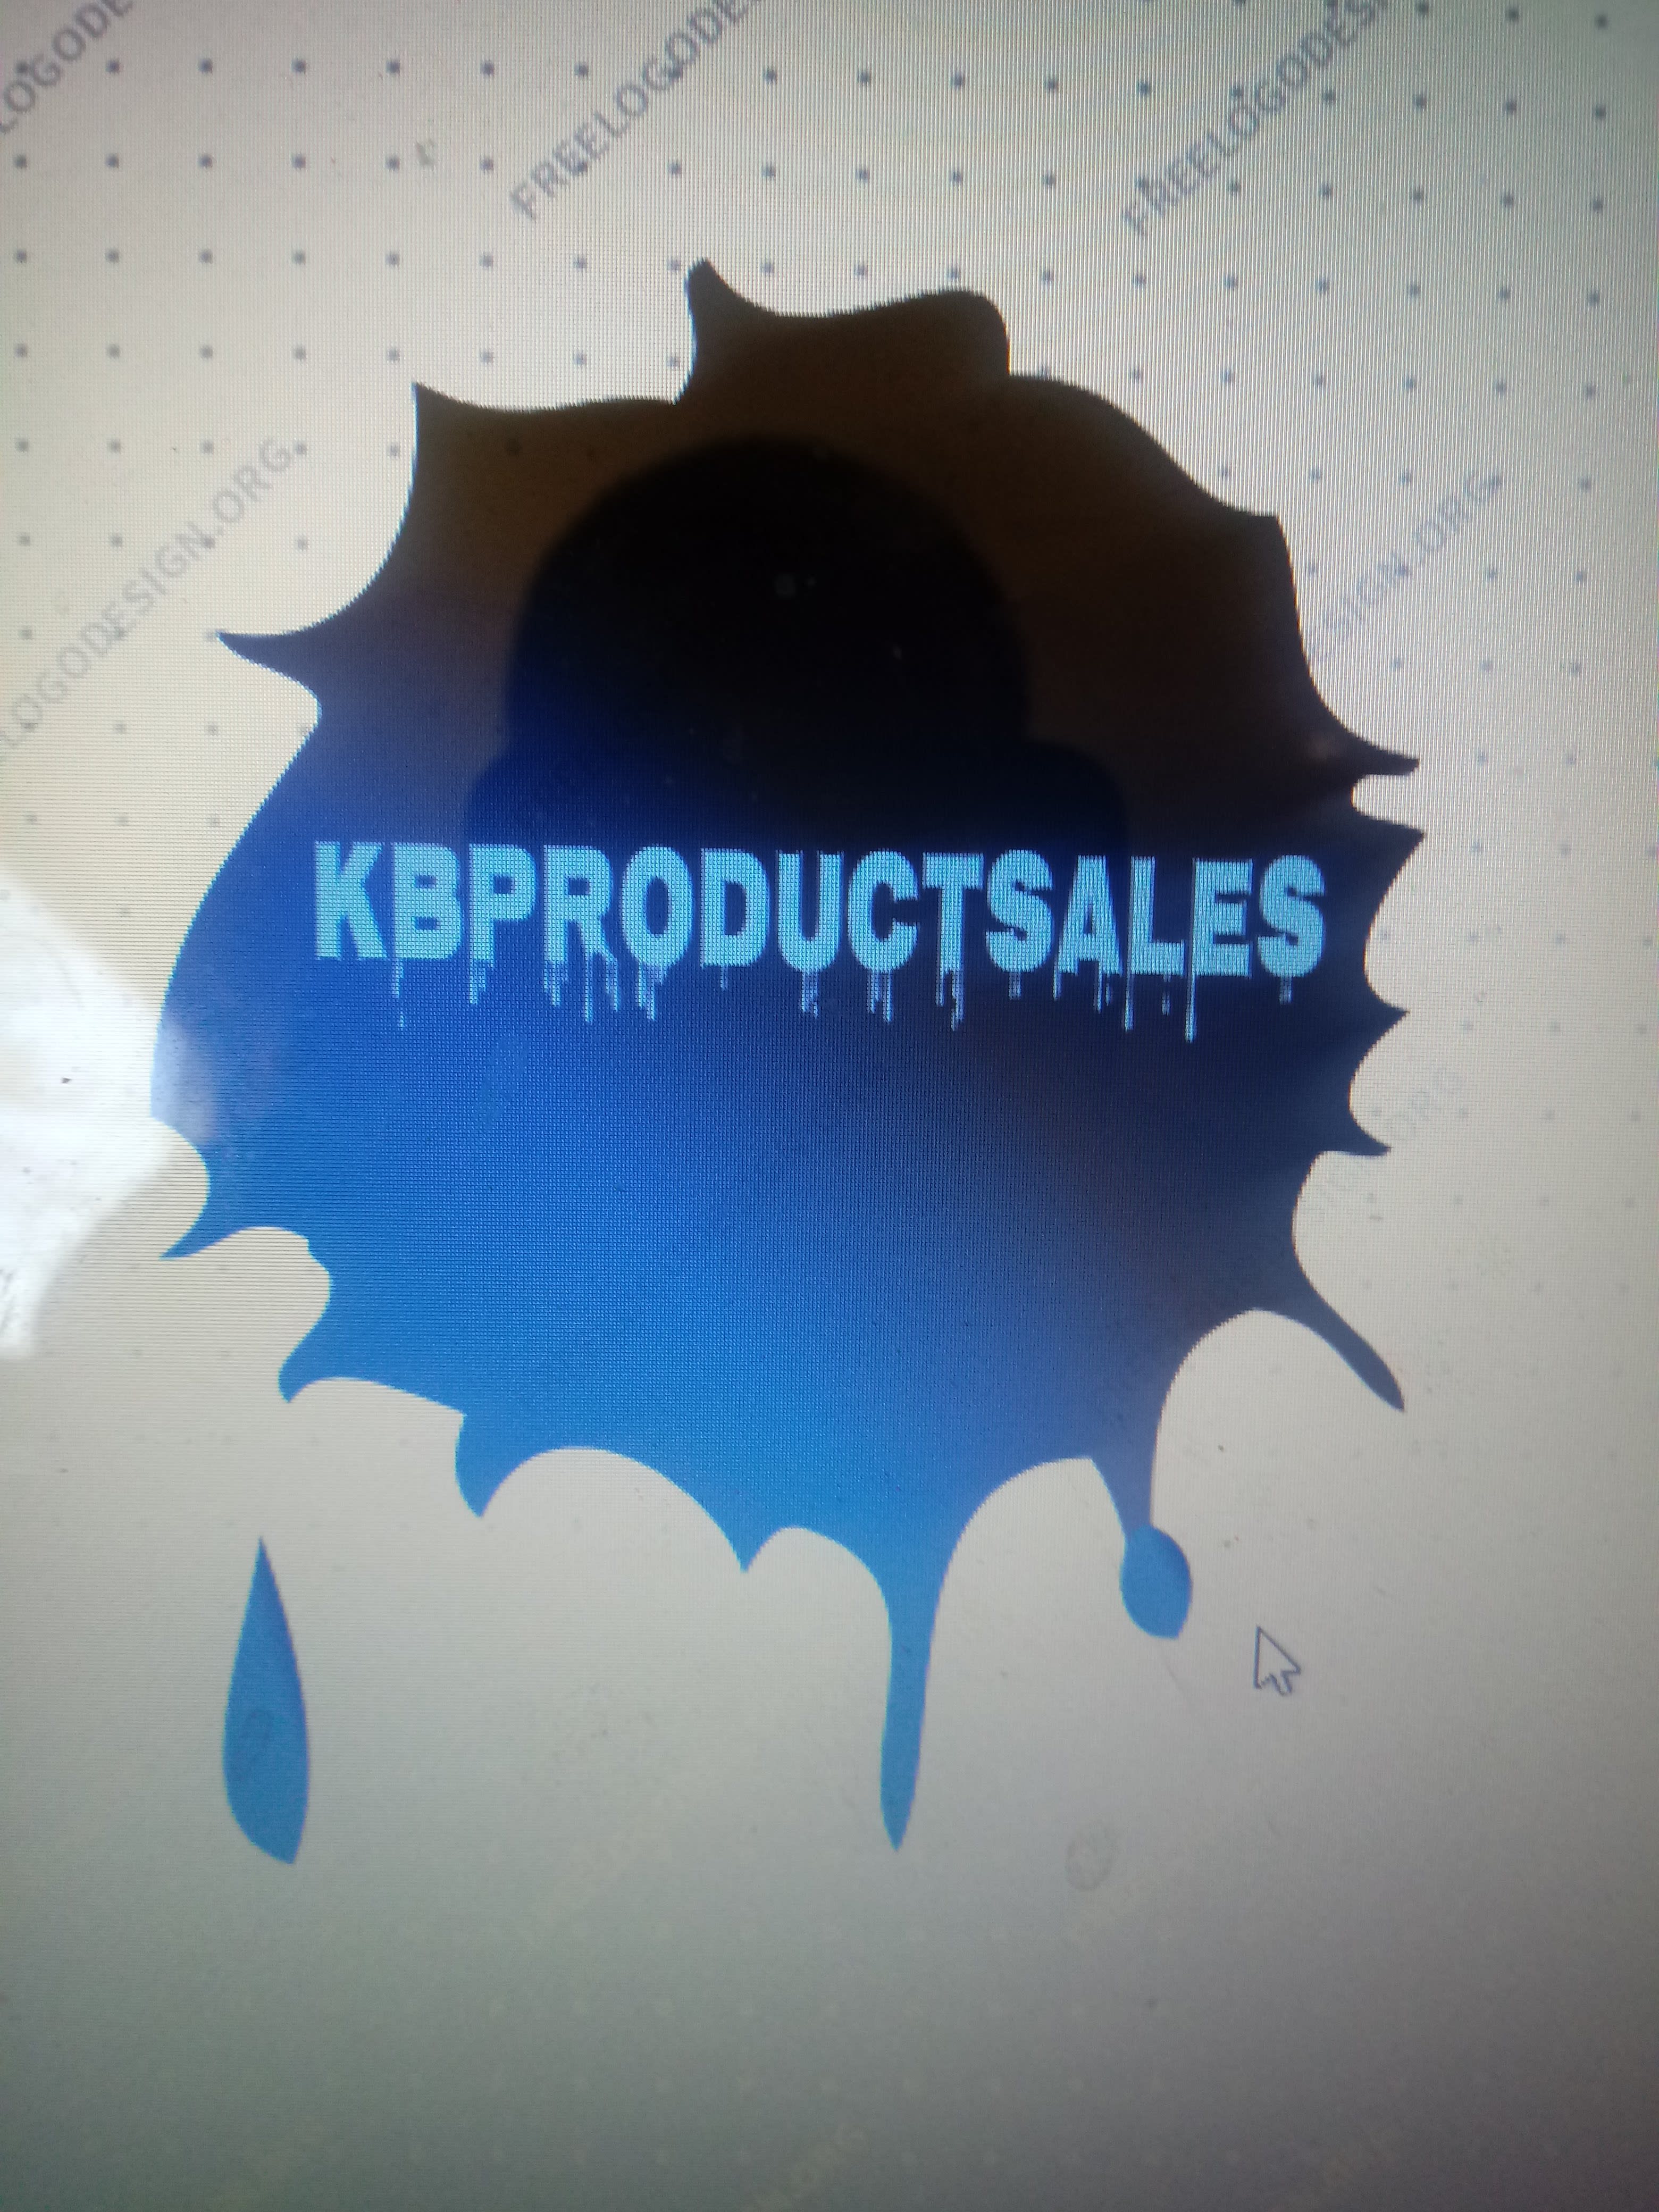 KB Product Sales